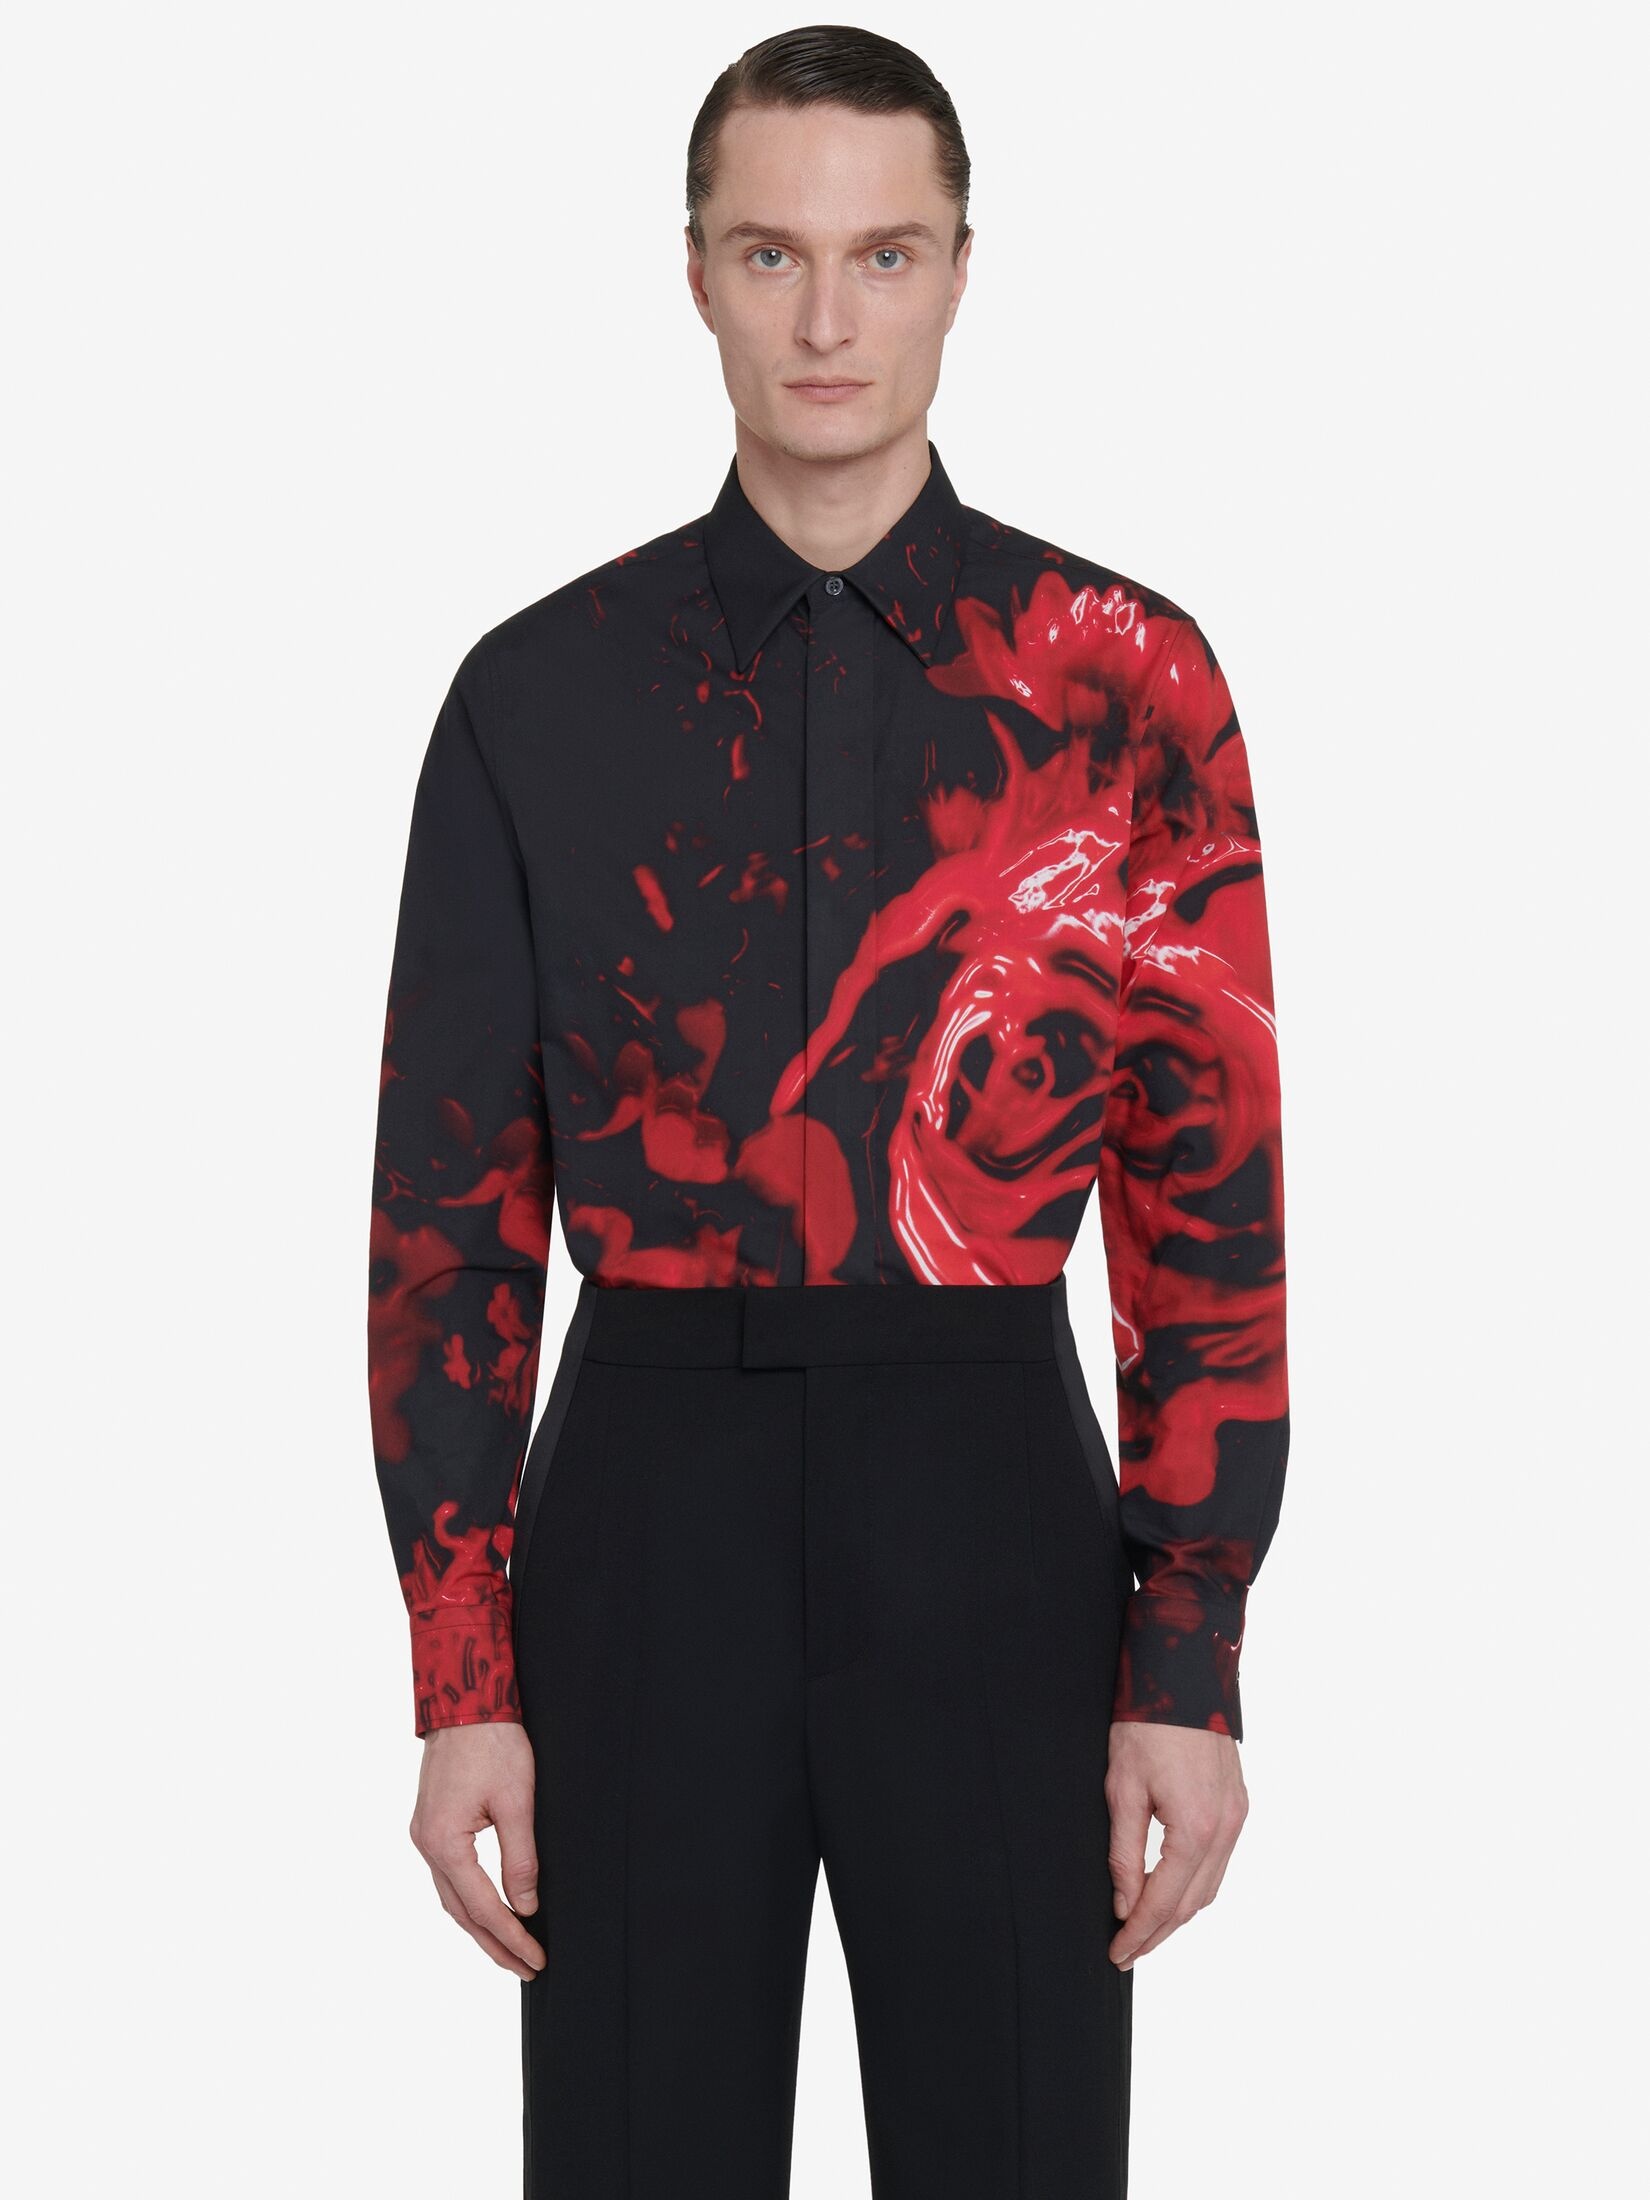 Men's Wax Flower Shirt in Black/red - 5